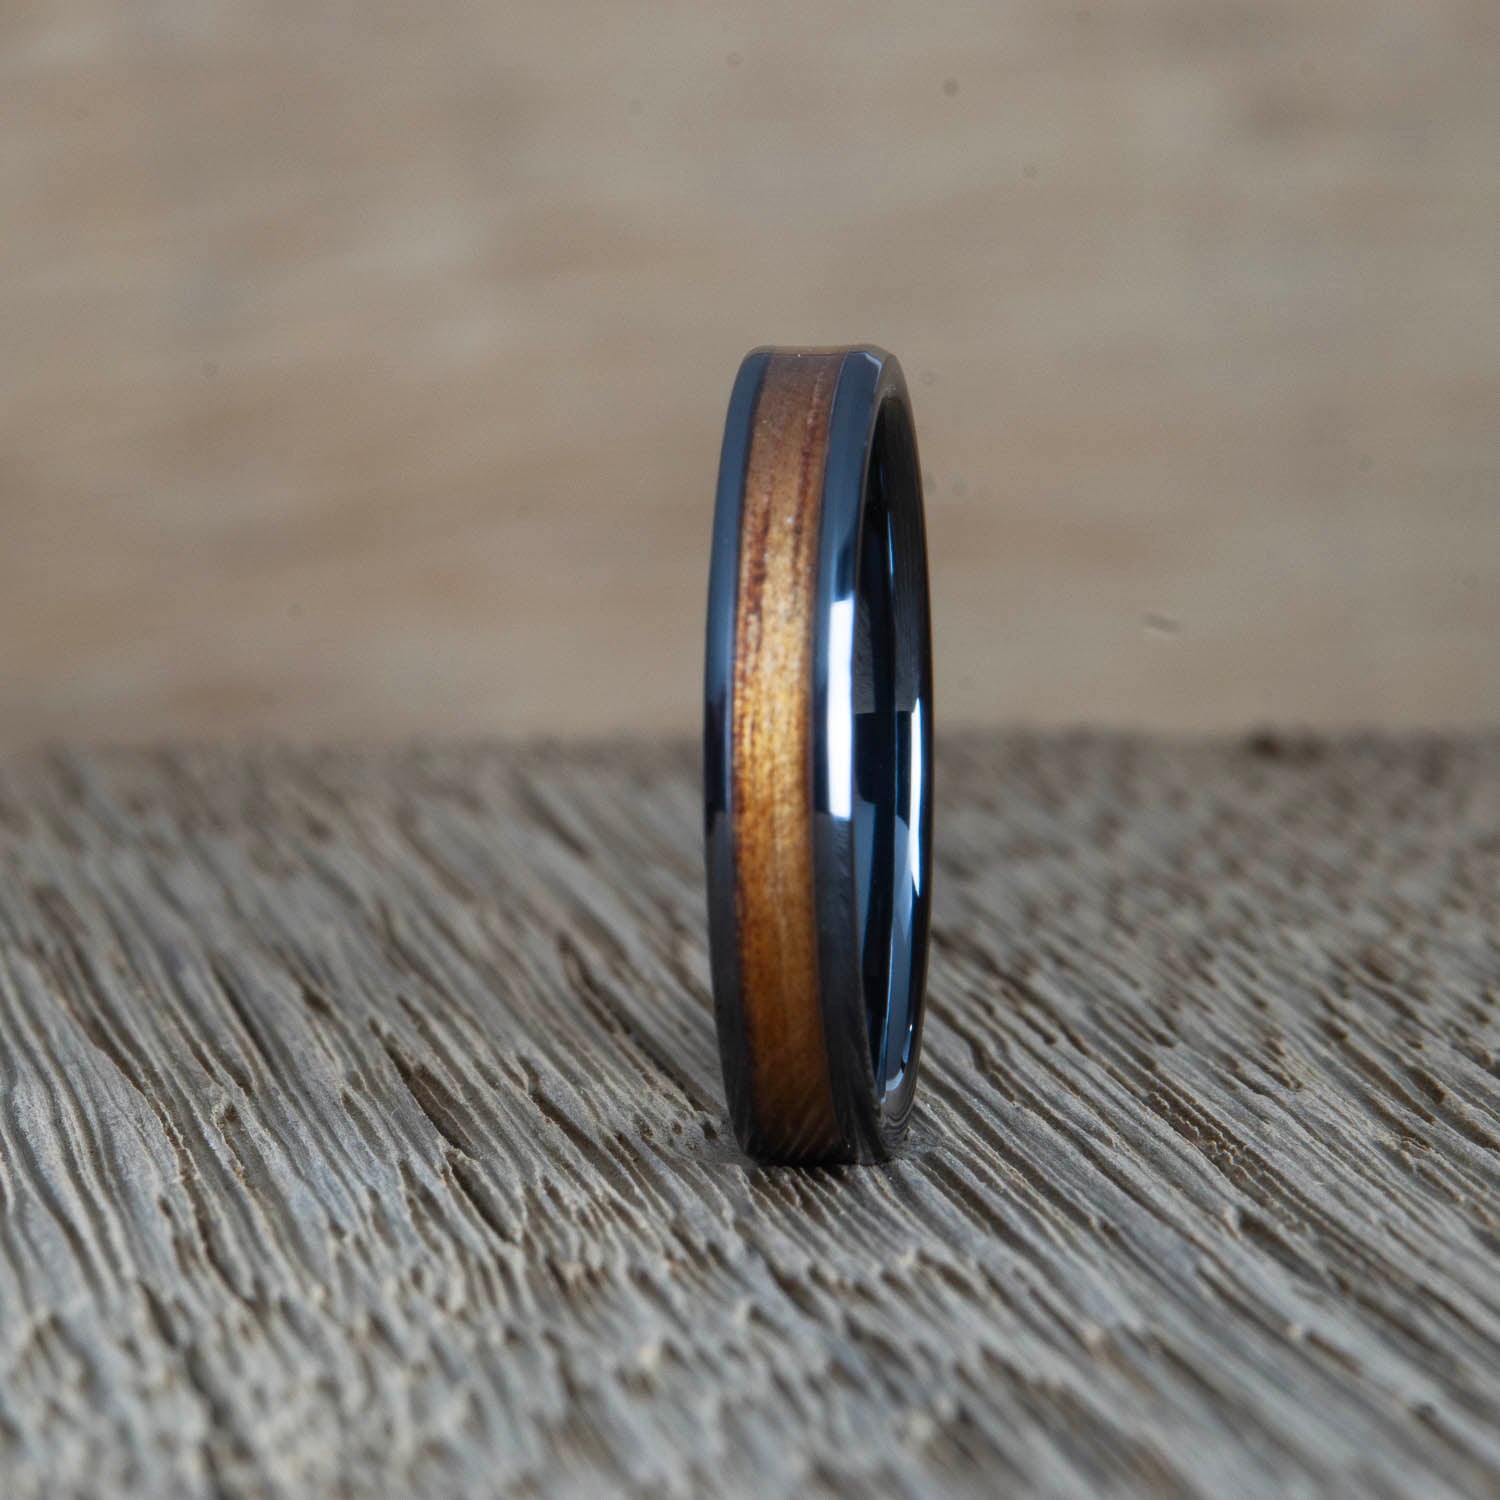 "The island" Koa wood inlaid Black ring